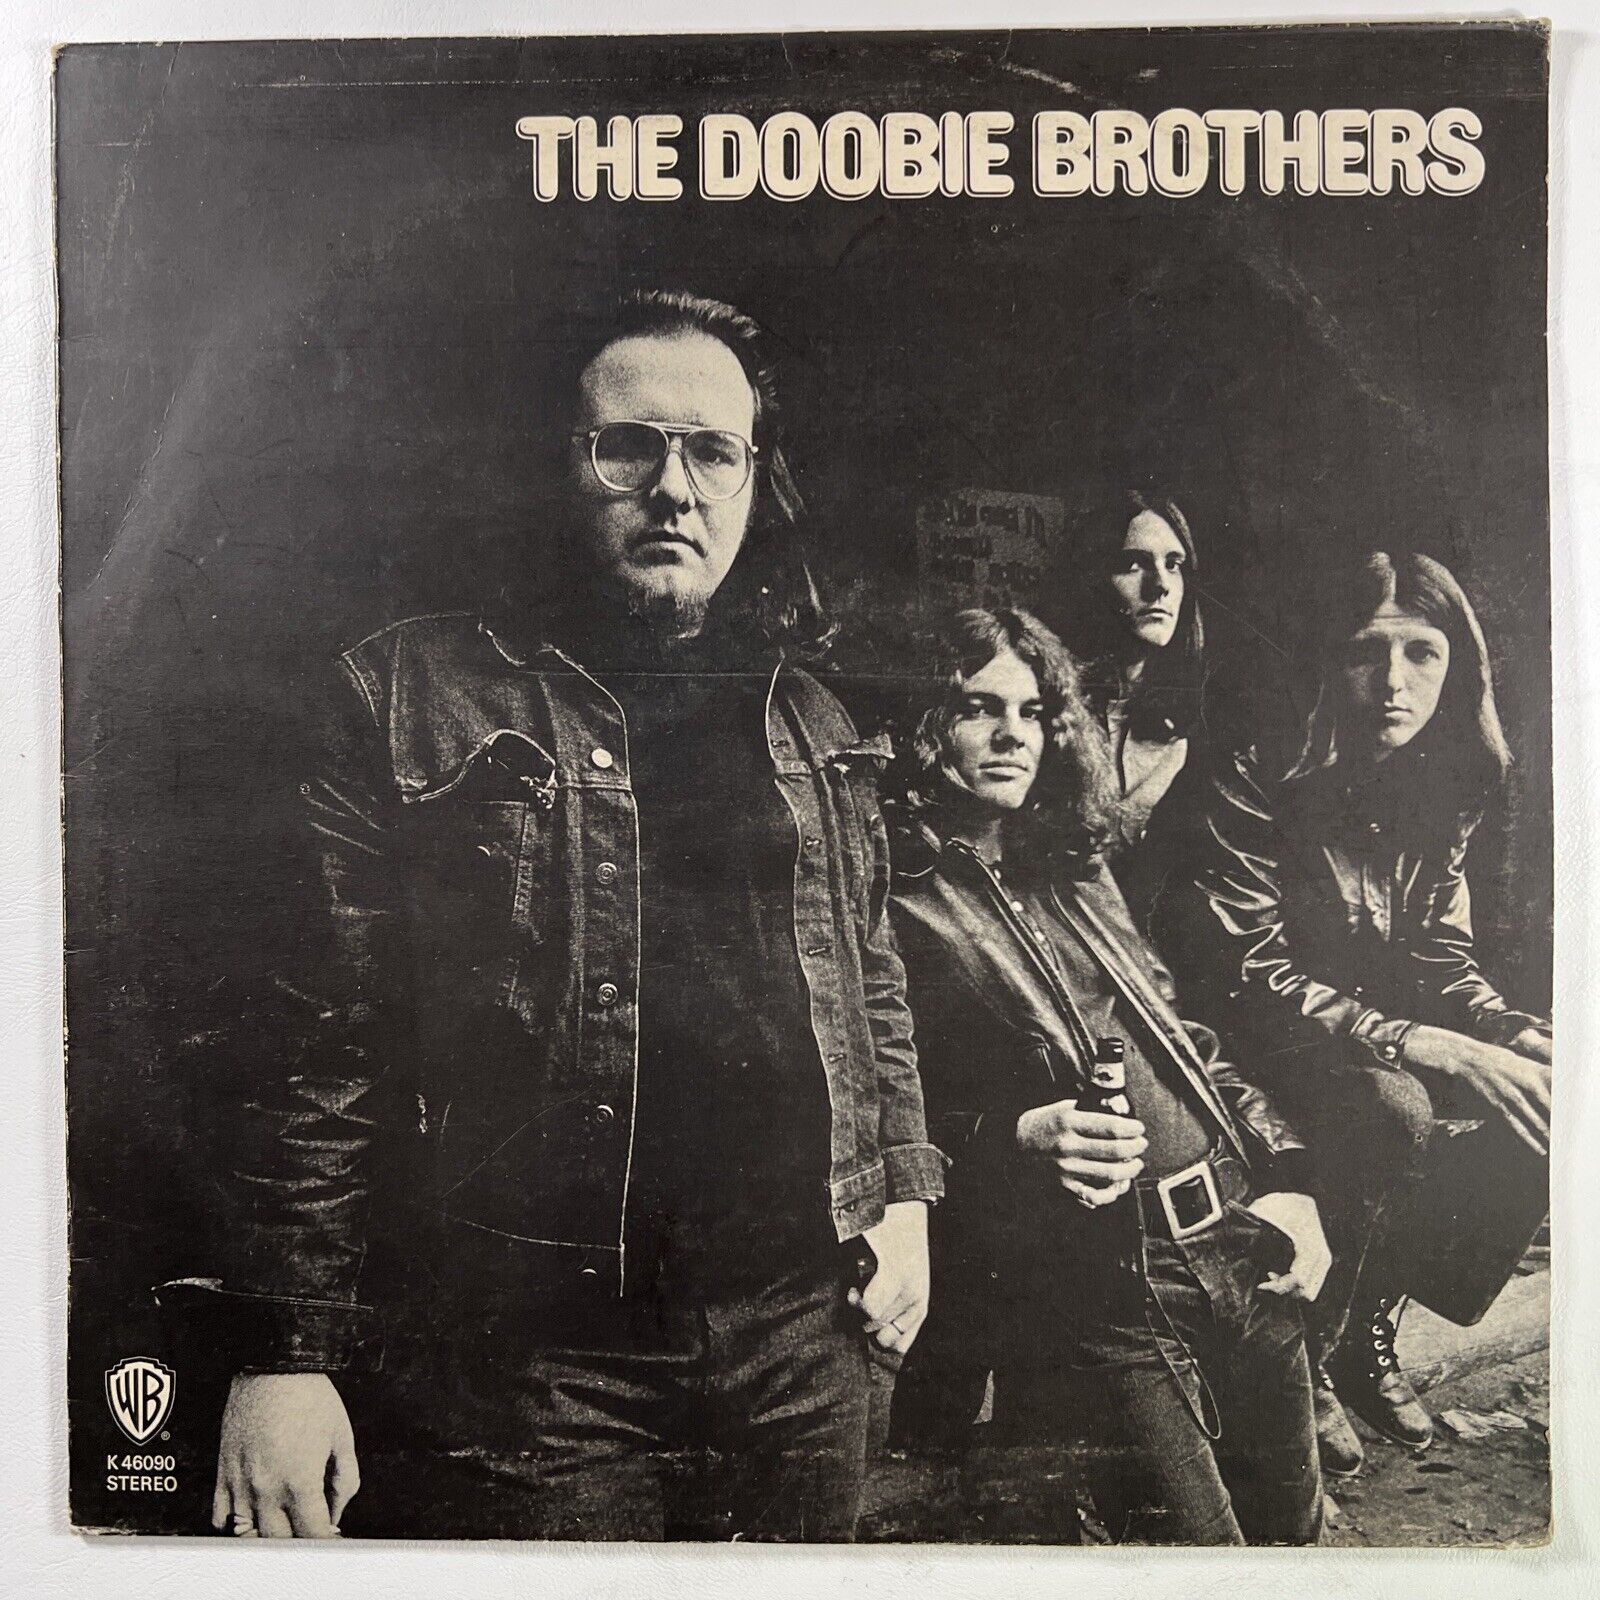 The Doobie Brothers “Self Titled” Debut LP/Warner Bros. K46090 (EX) 1971 UK